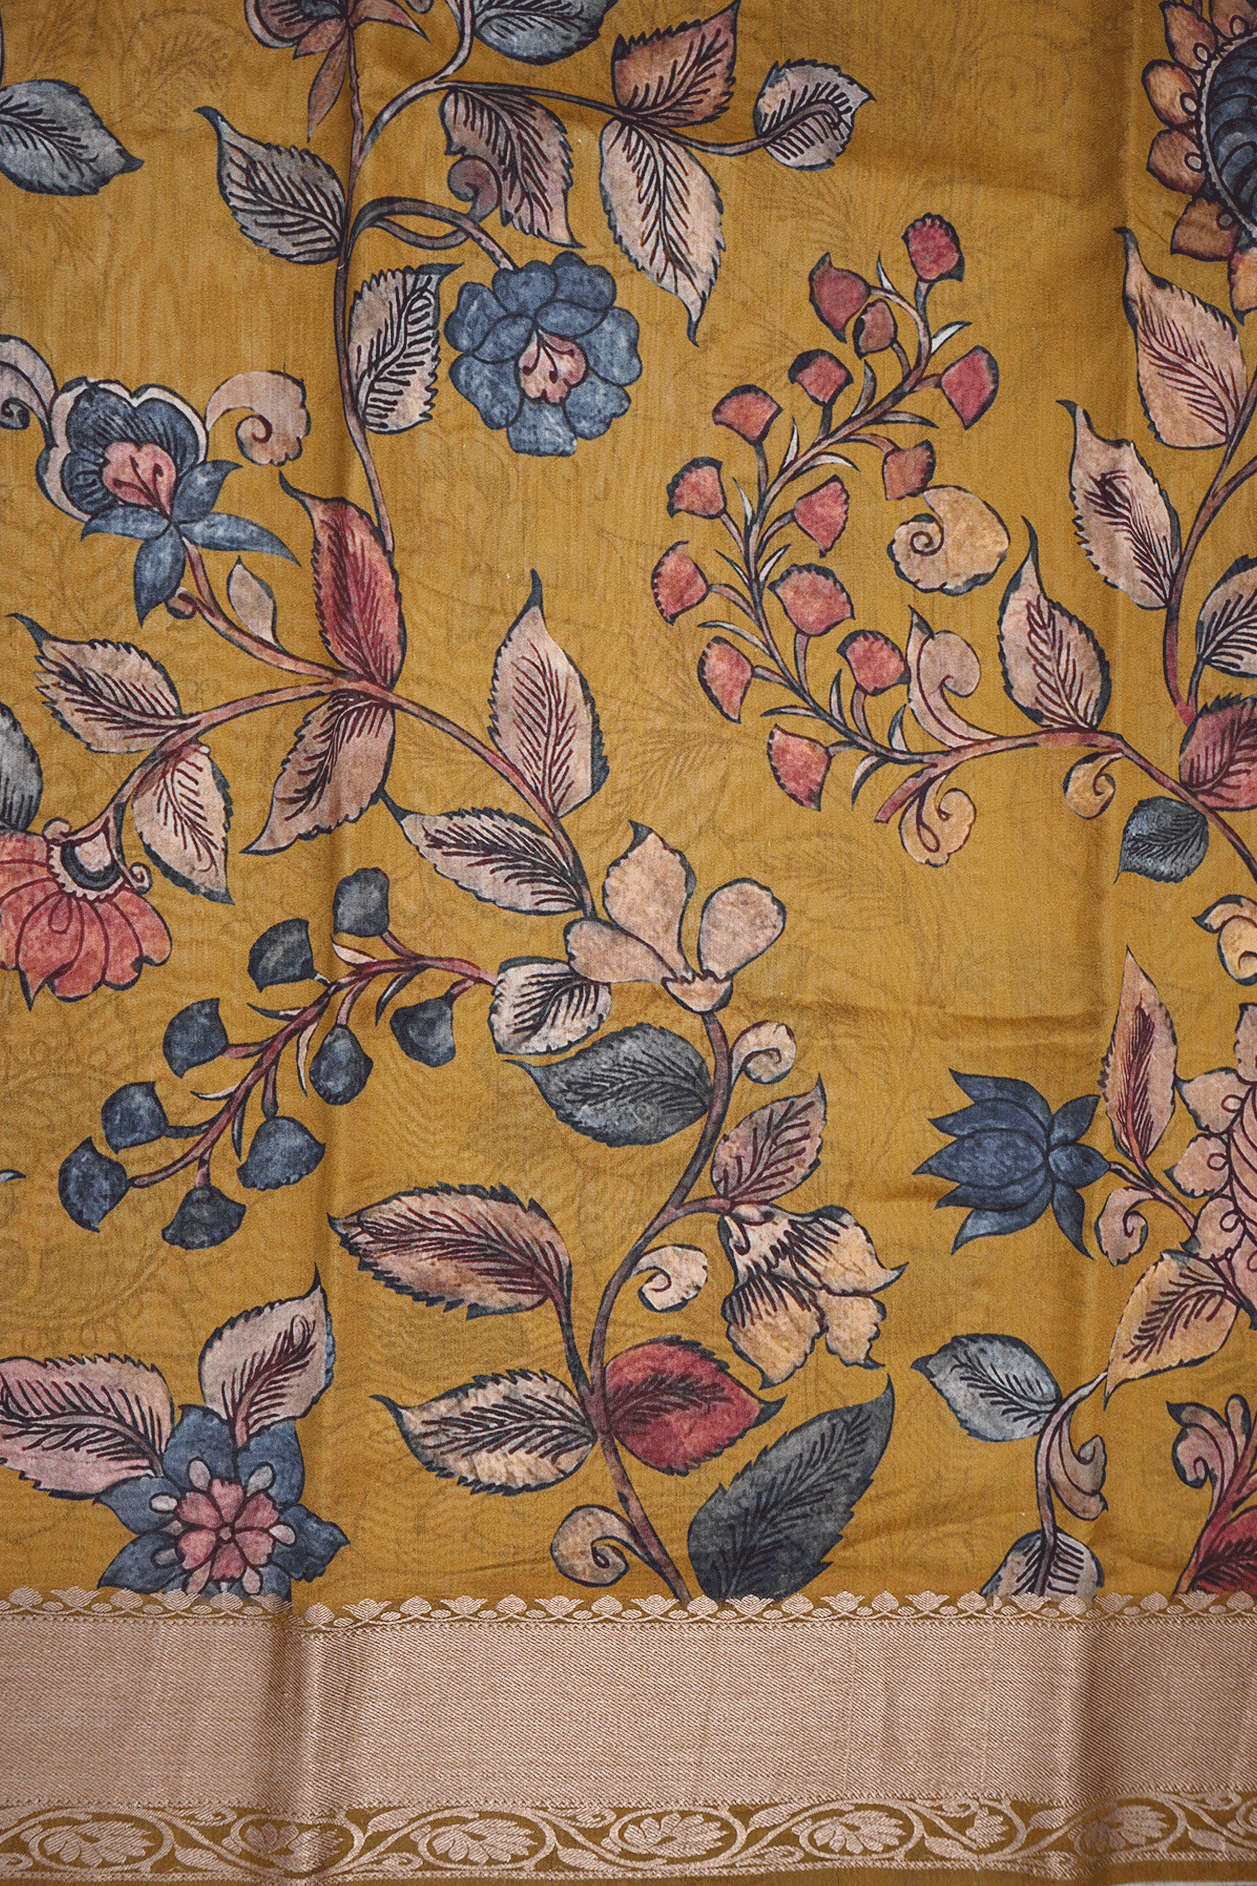 Floral Printed Golden Yellow Chanderi Silk Cotton Saree